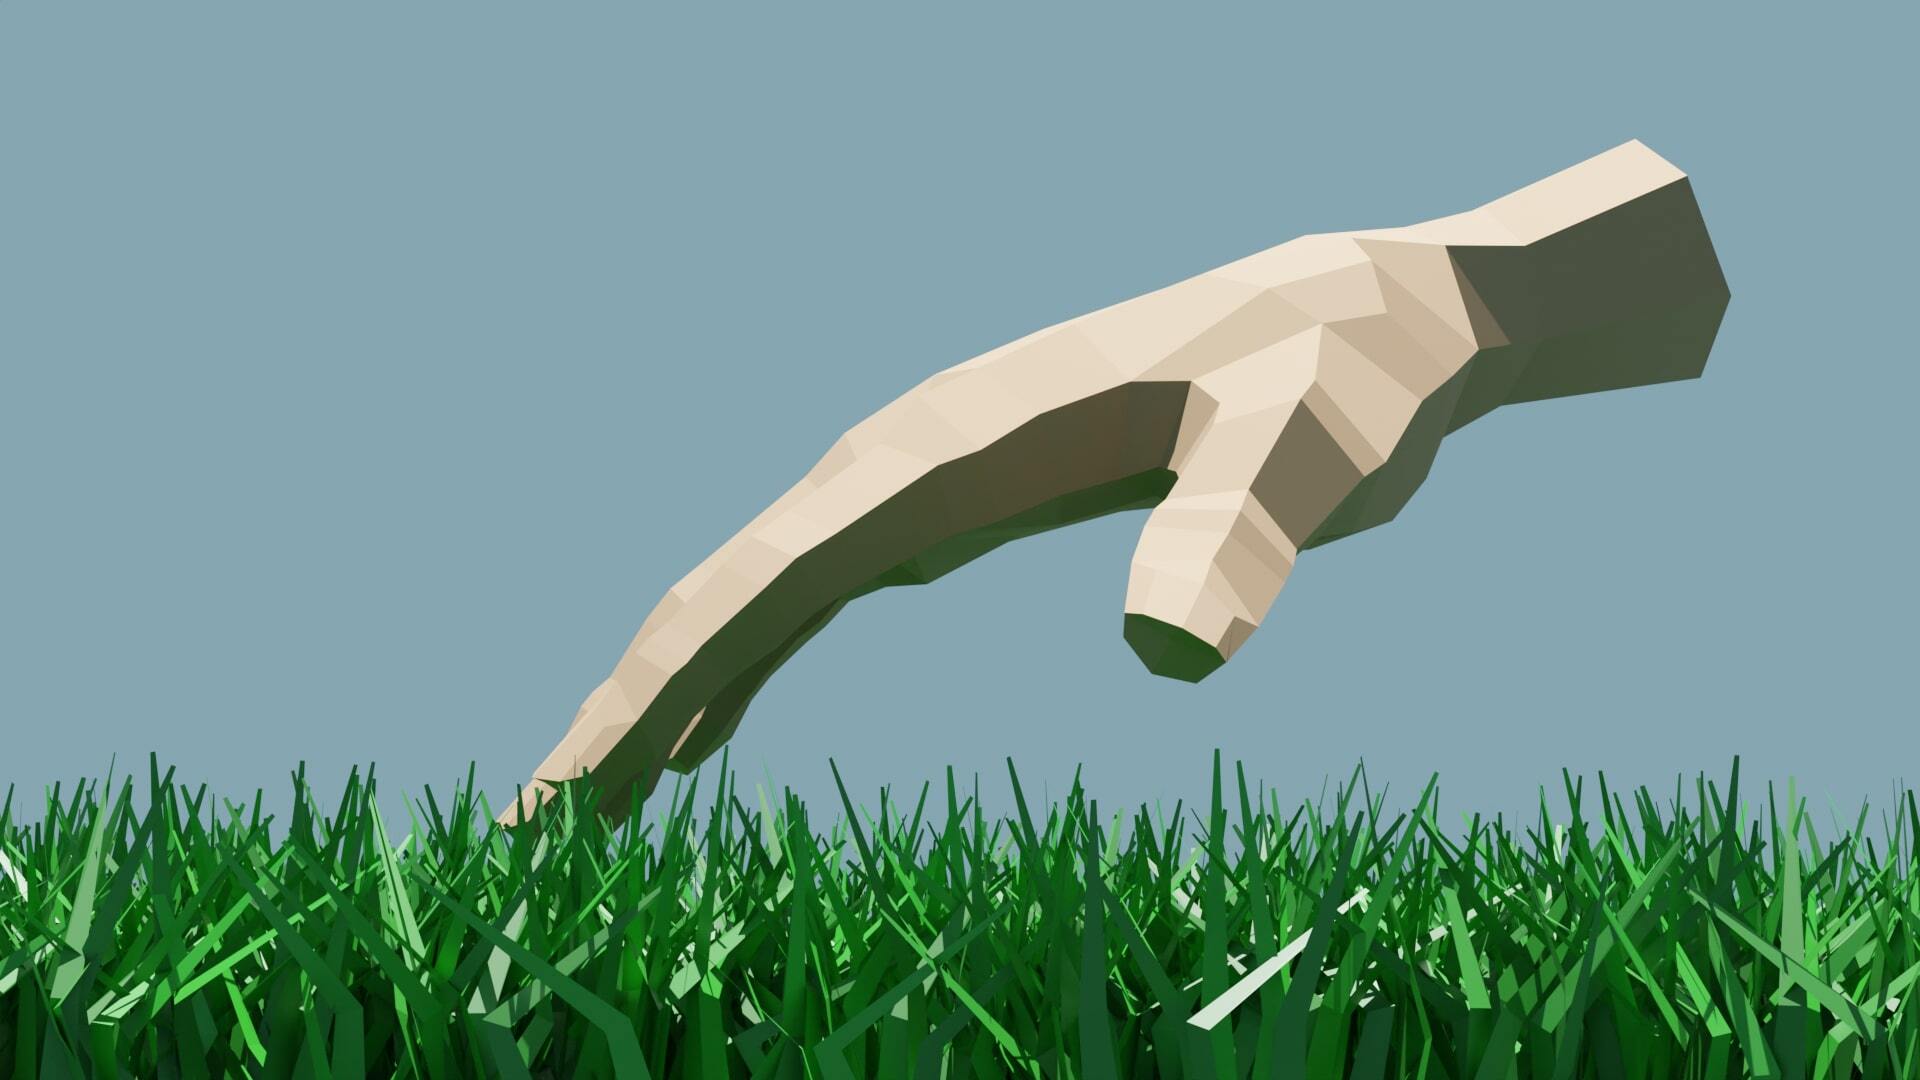 The touching grass simulator… 